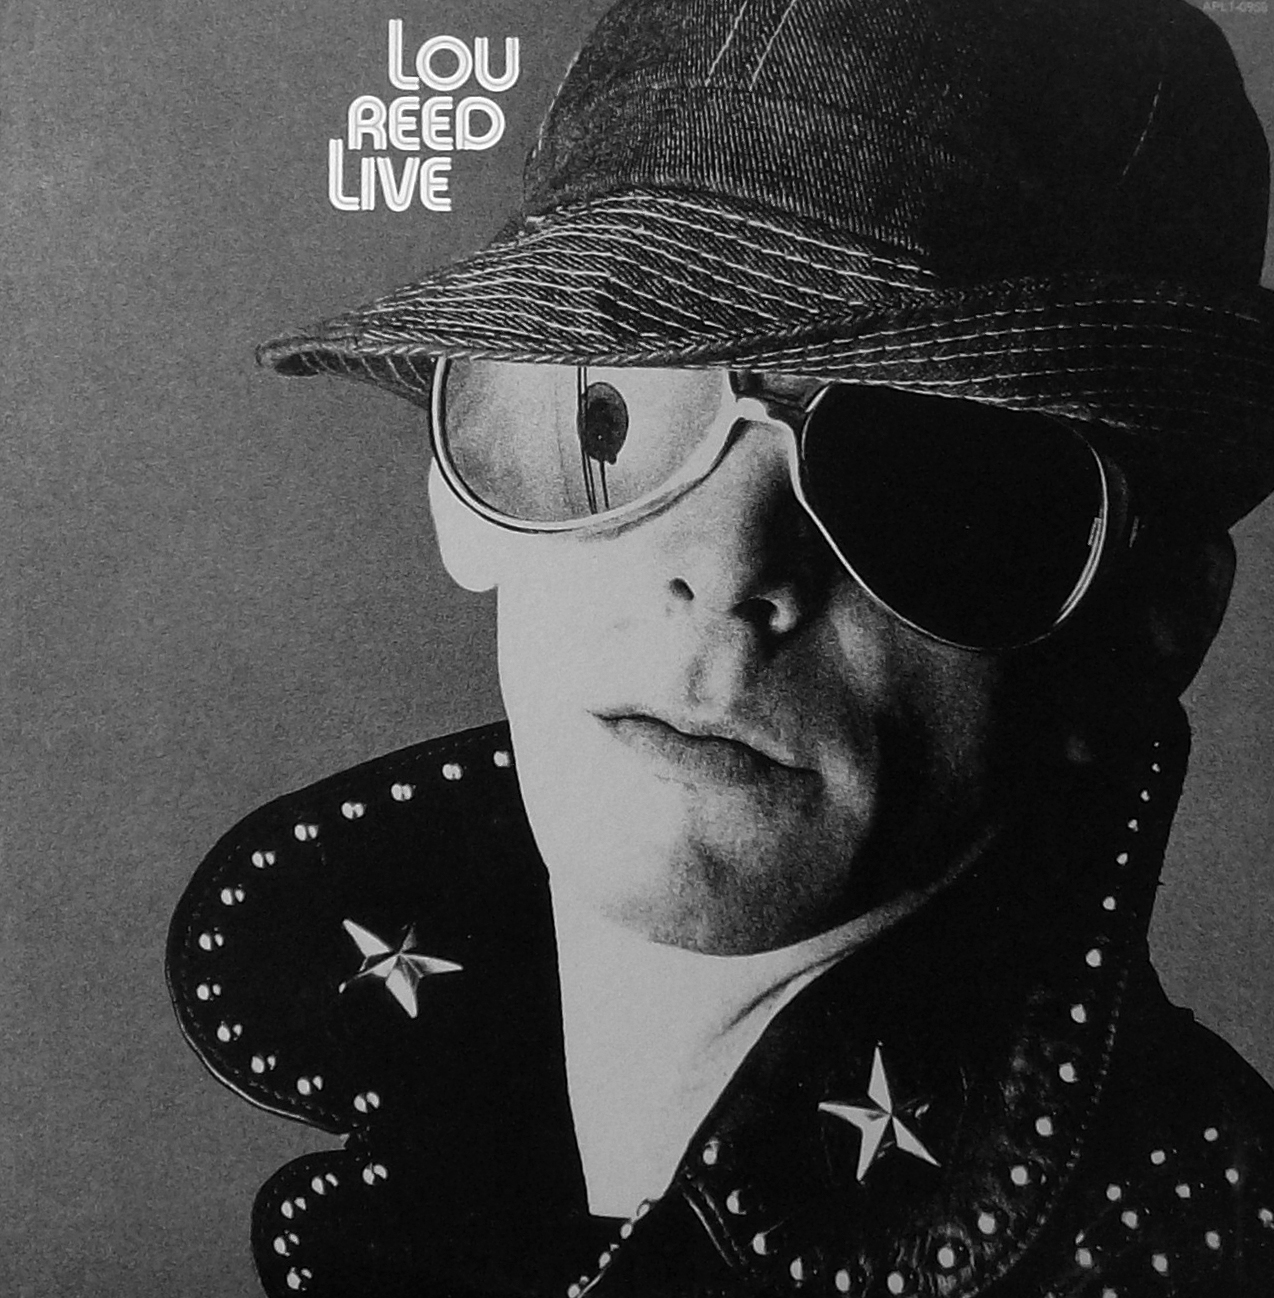 Ha muerto Lou Reed - Página 11 Lou-reed-live-cover